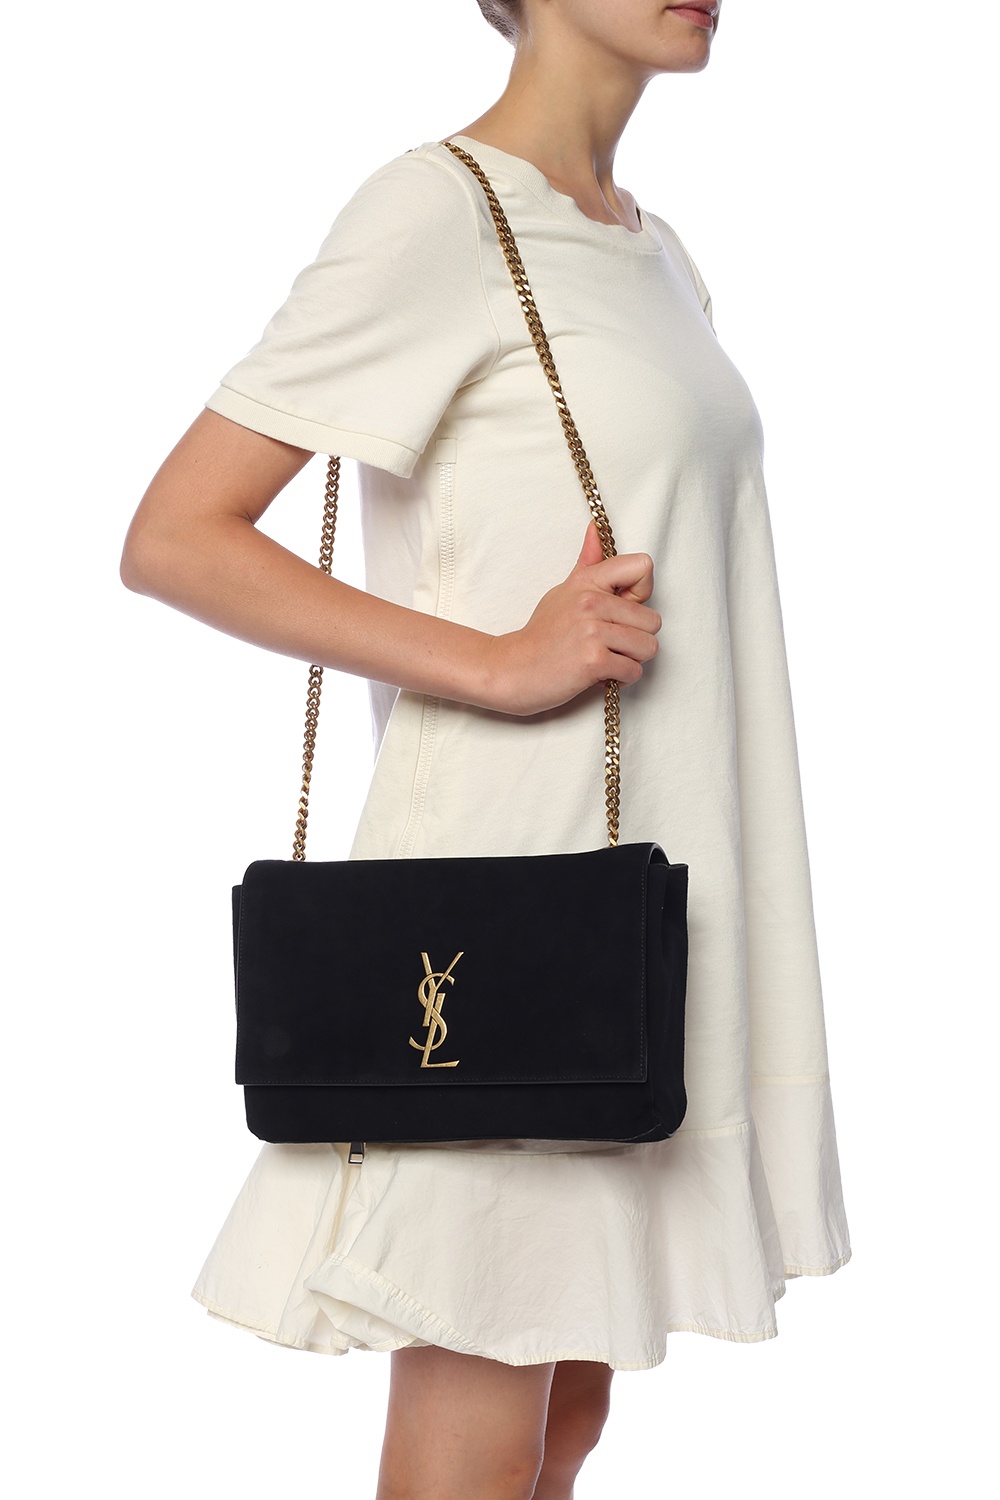 Saint Laurent Kate Reversible Chain Shoulder Bag